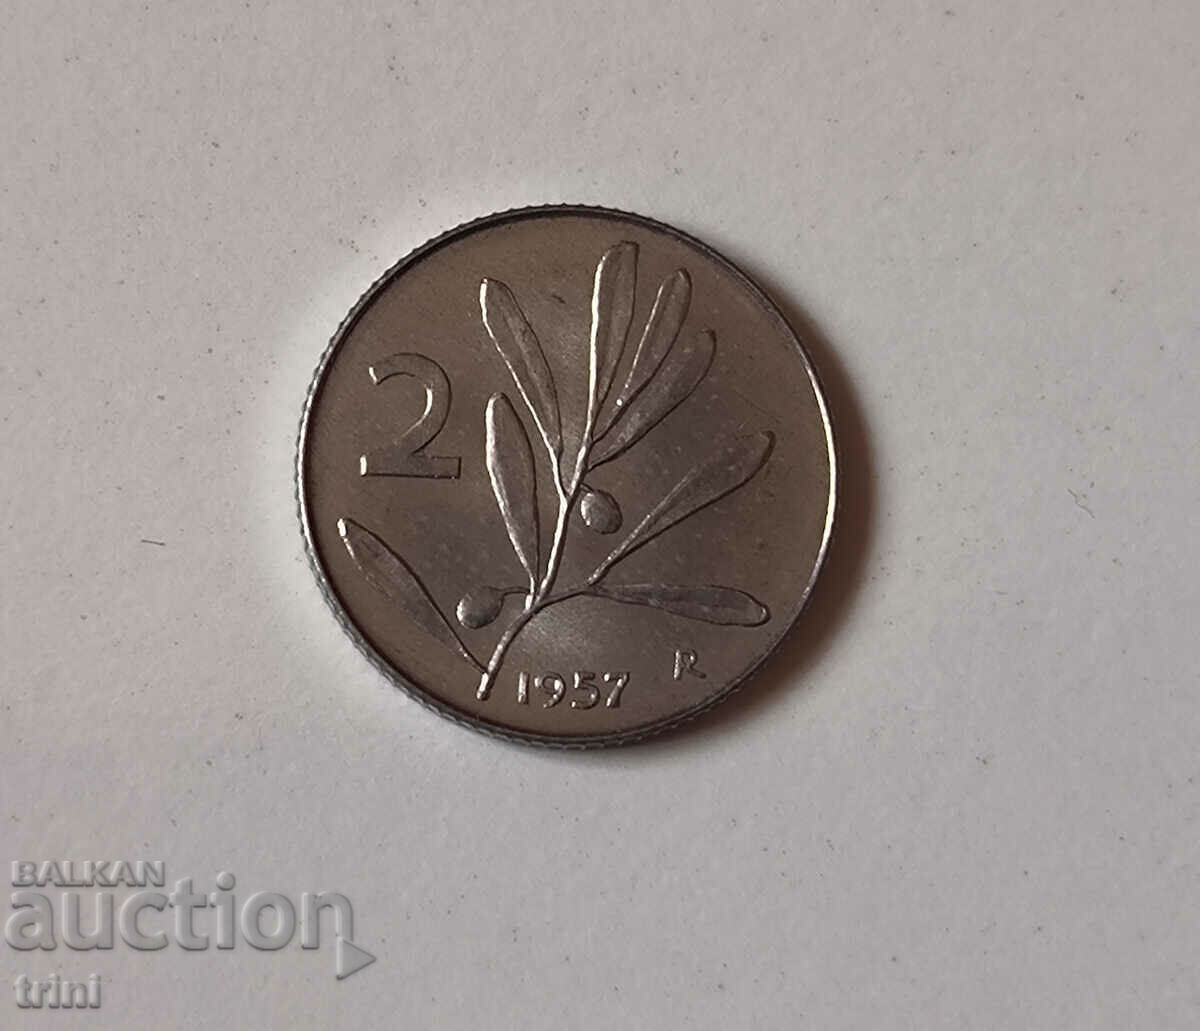 Italia 2 lire 1957 anul g105